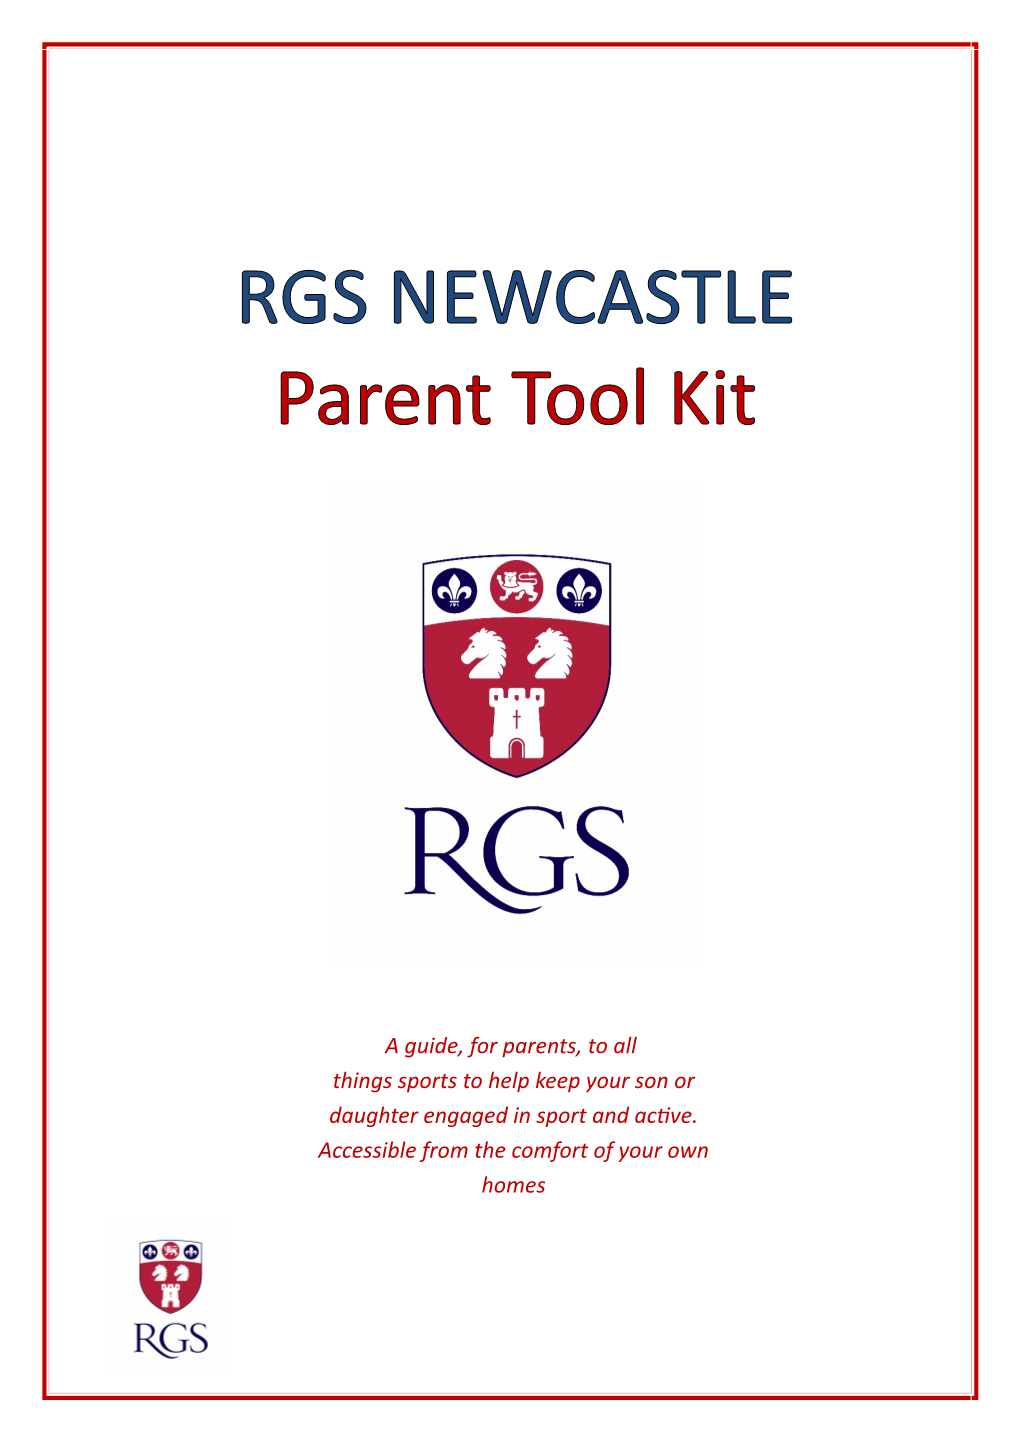 RGS NEWCASTLE Parent Tool Kit